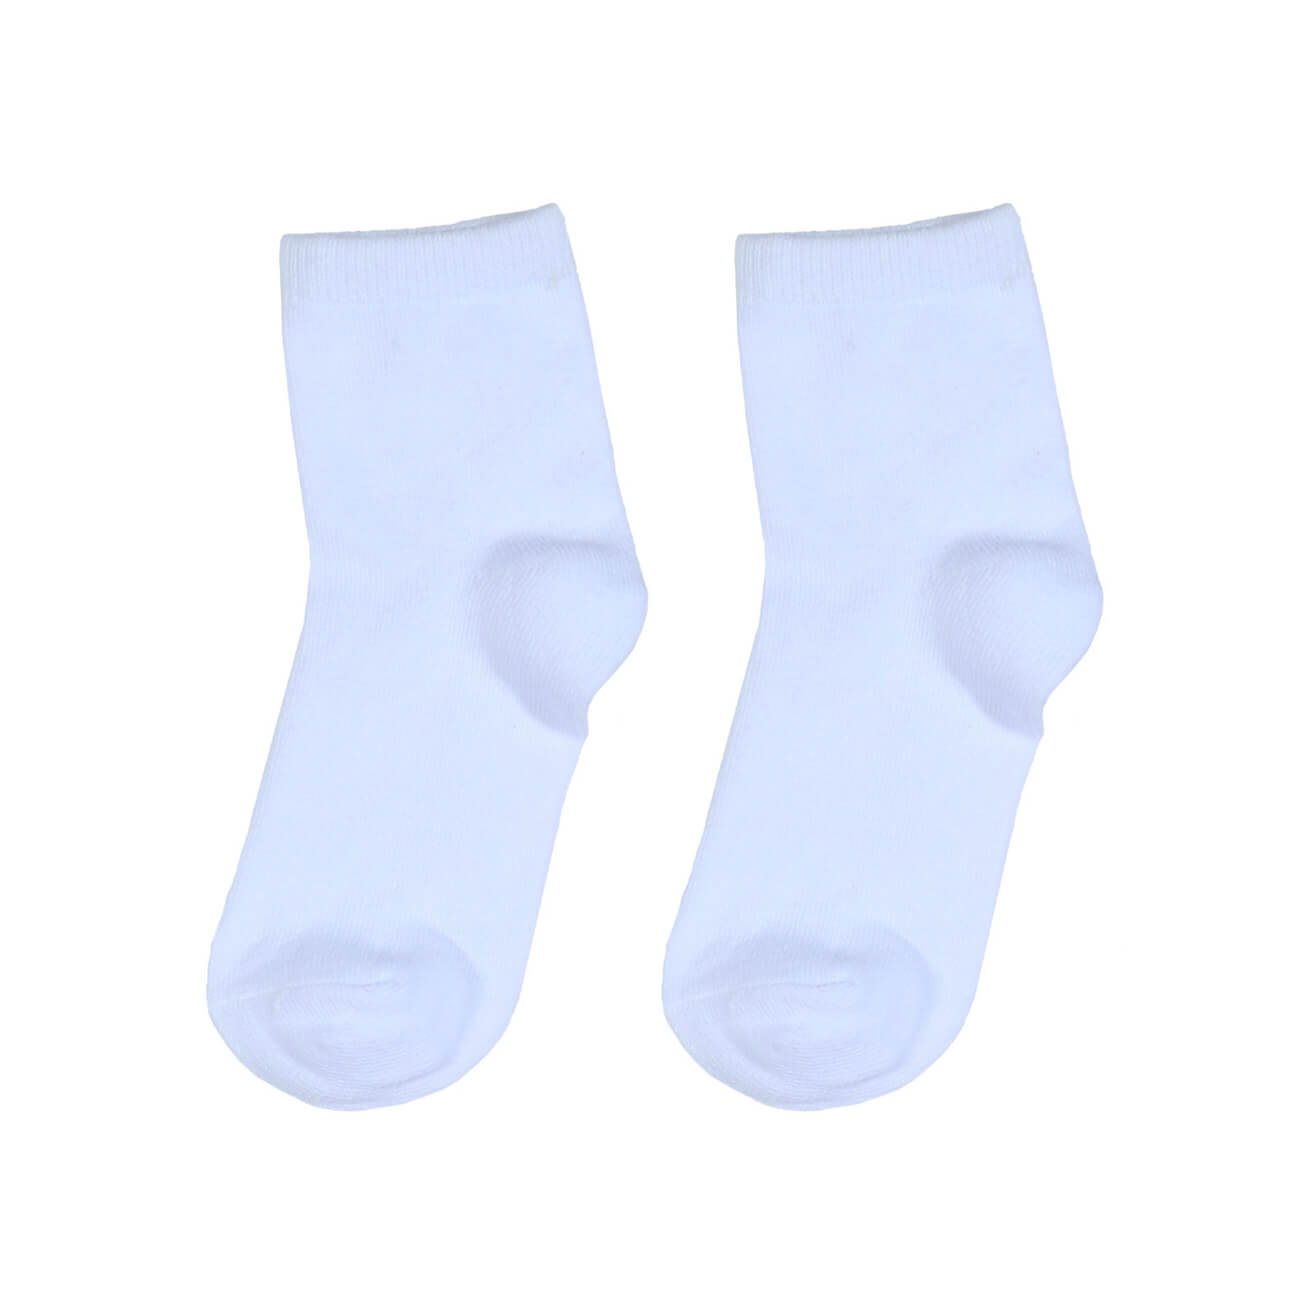 Children's socks, Size 23-26, cotton / polyester, white, Basic изображение № 1